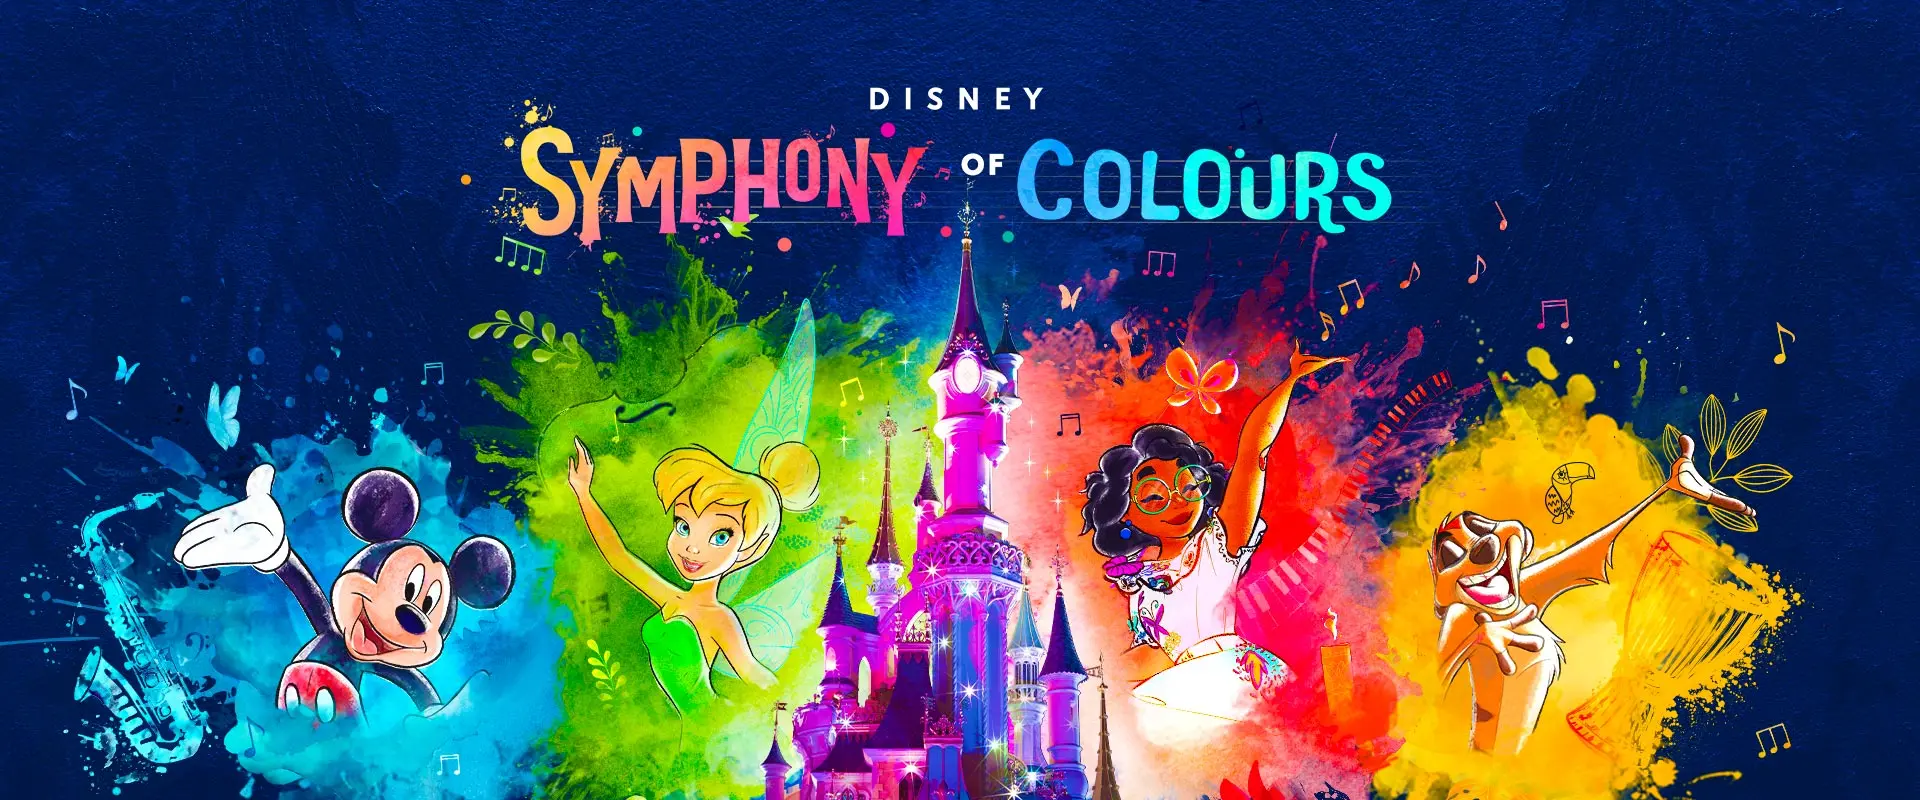 Disney Symphony of Colours | Disneyland Paris